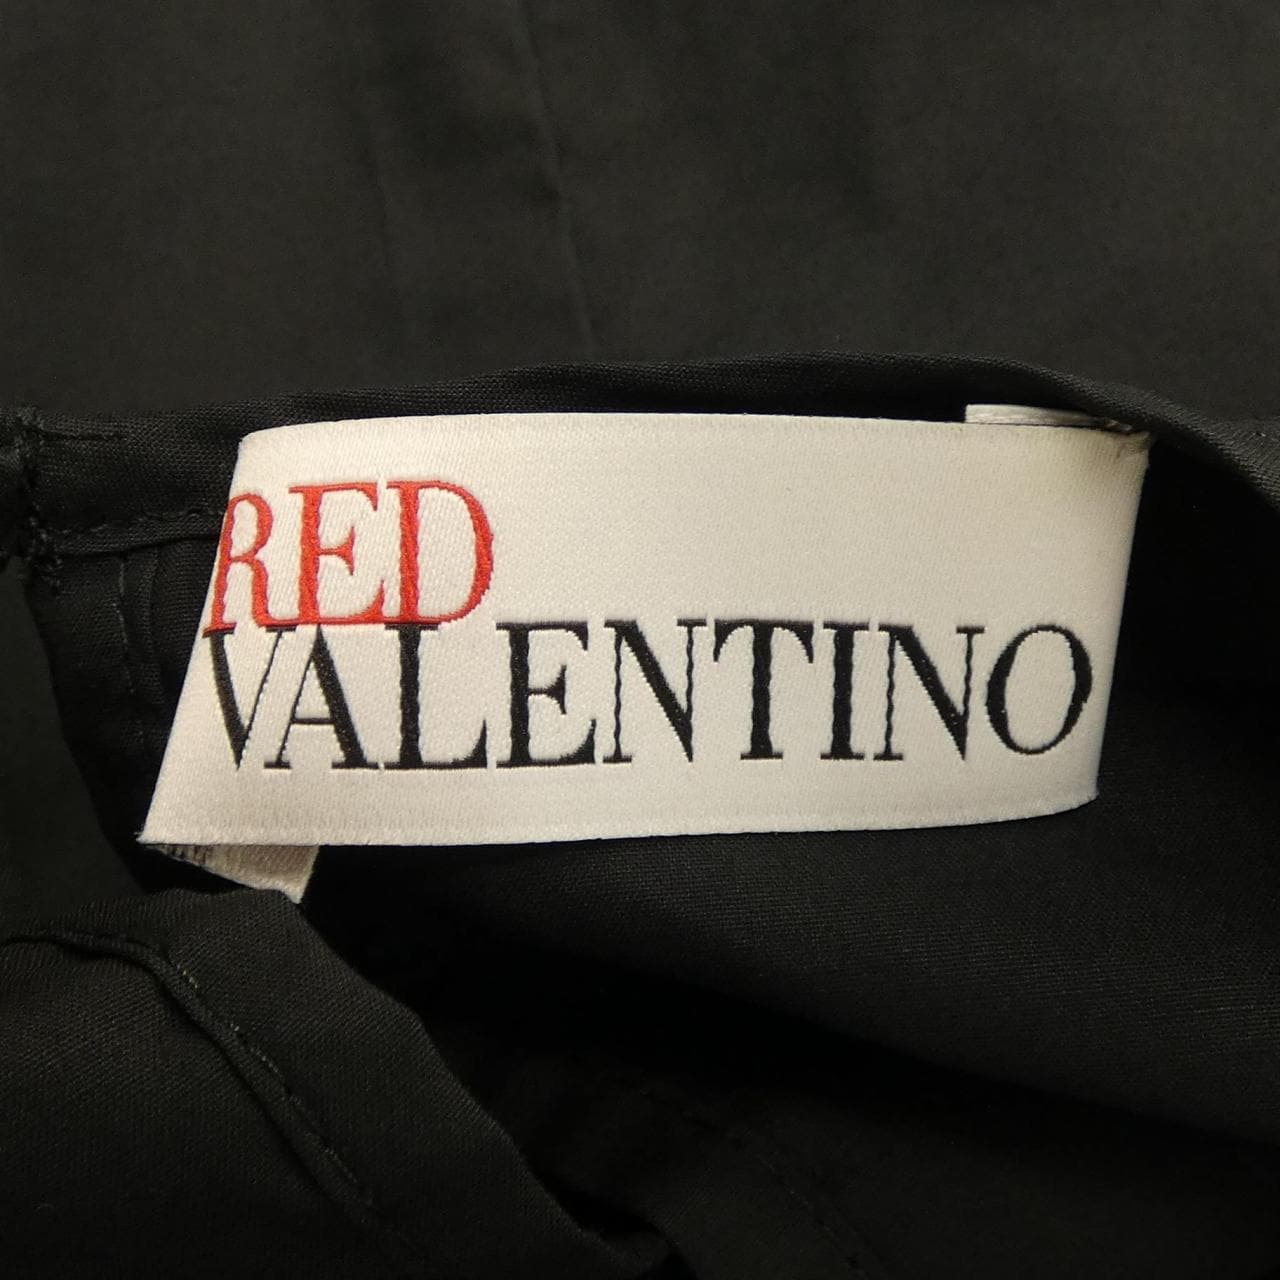 RED VALENTINO紅色華倫天奴套裝